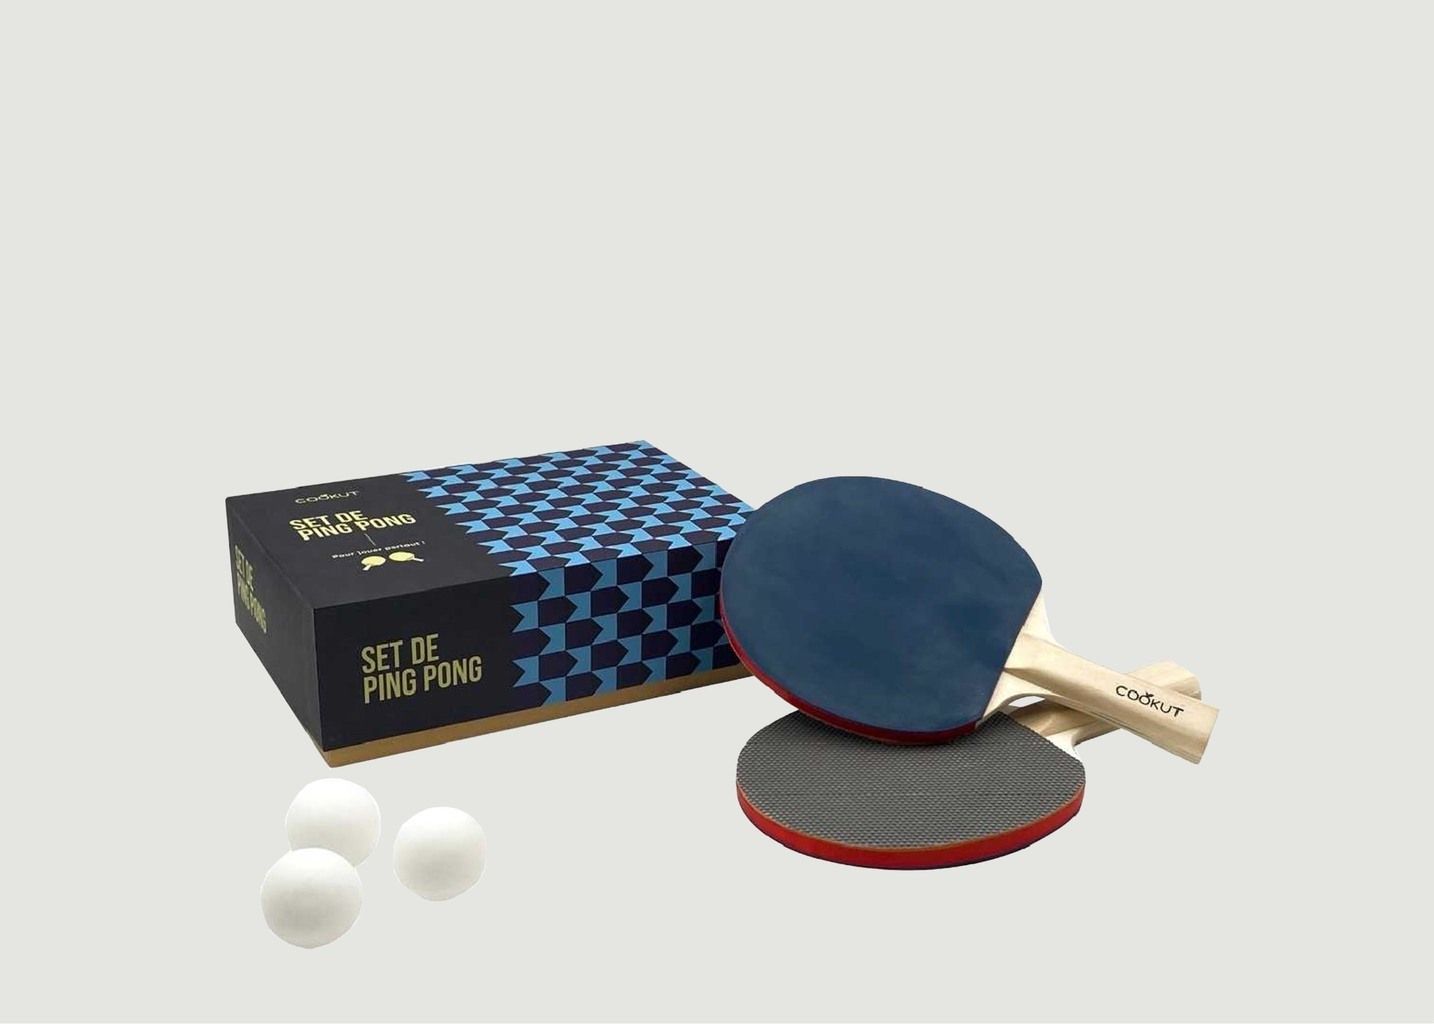 Set de Ping Pong  - Cookut